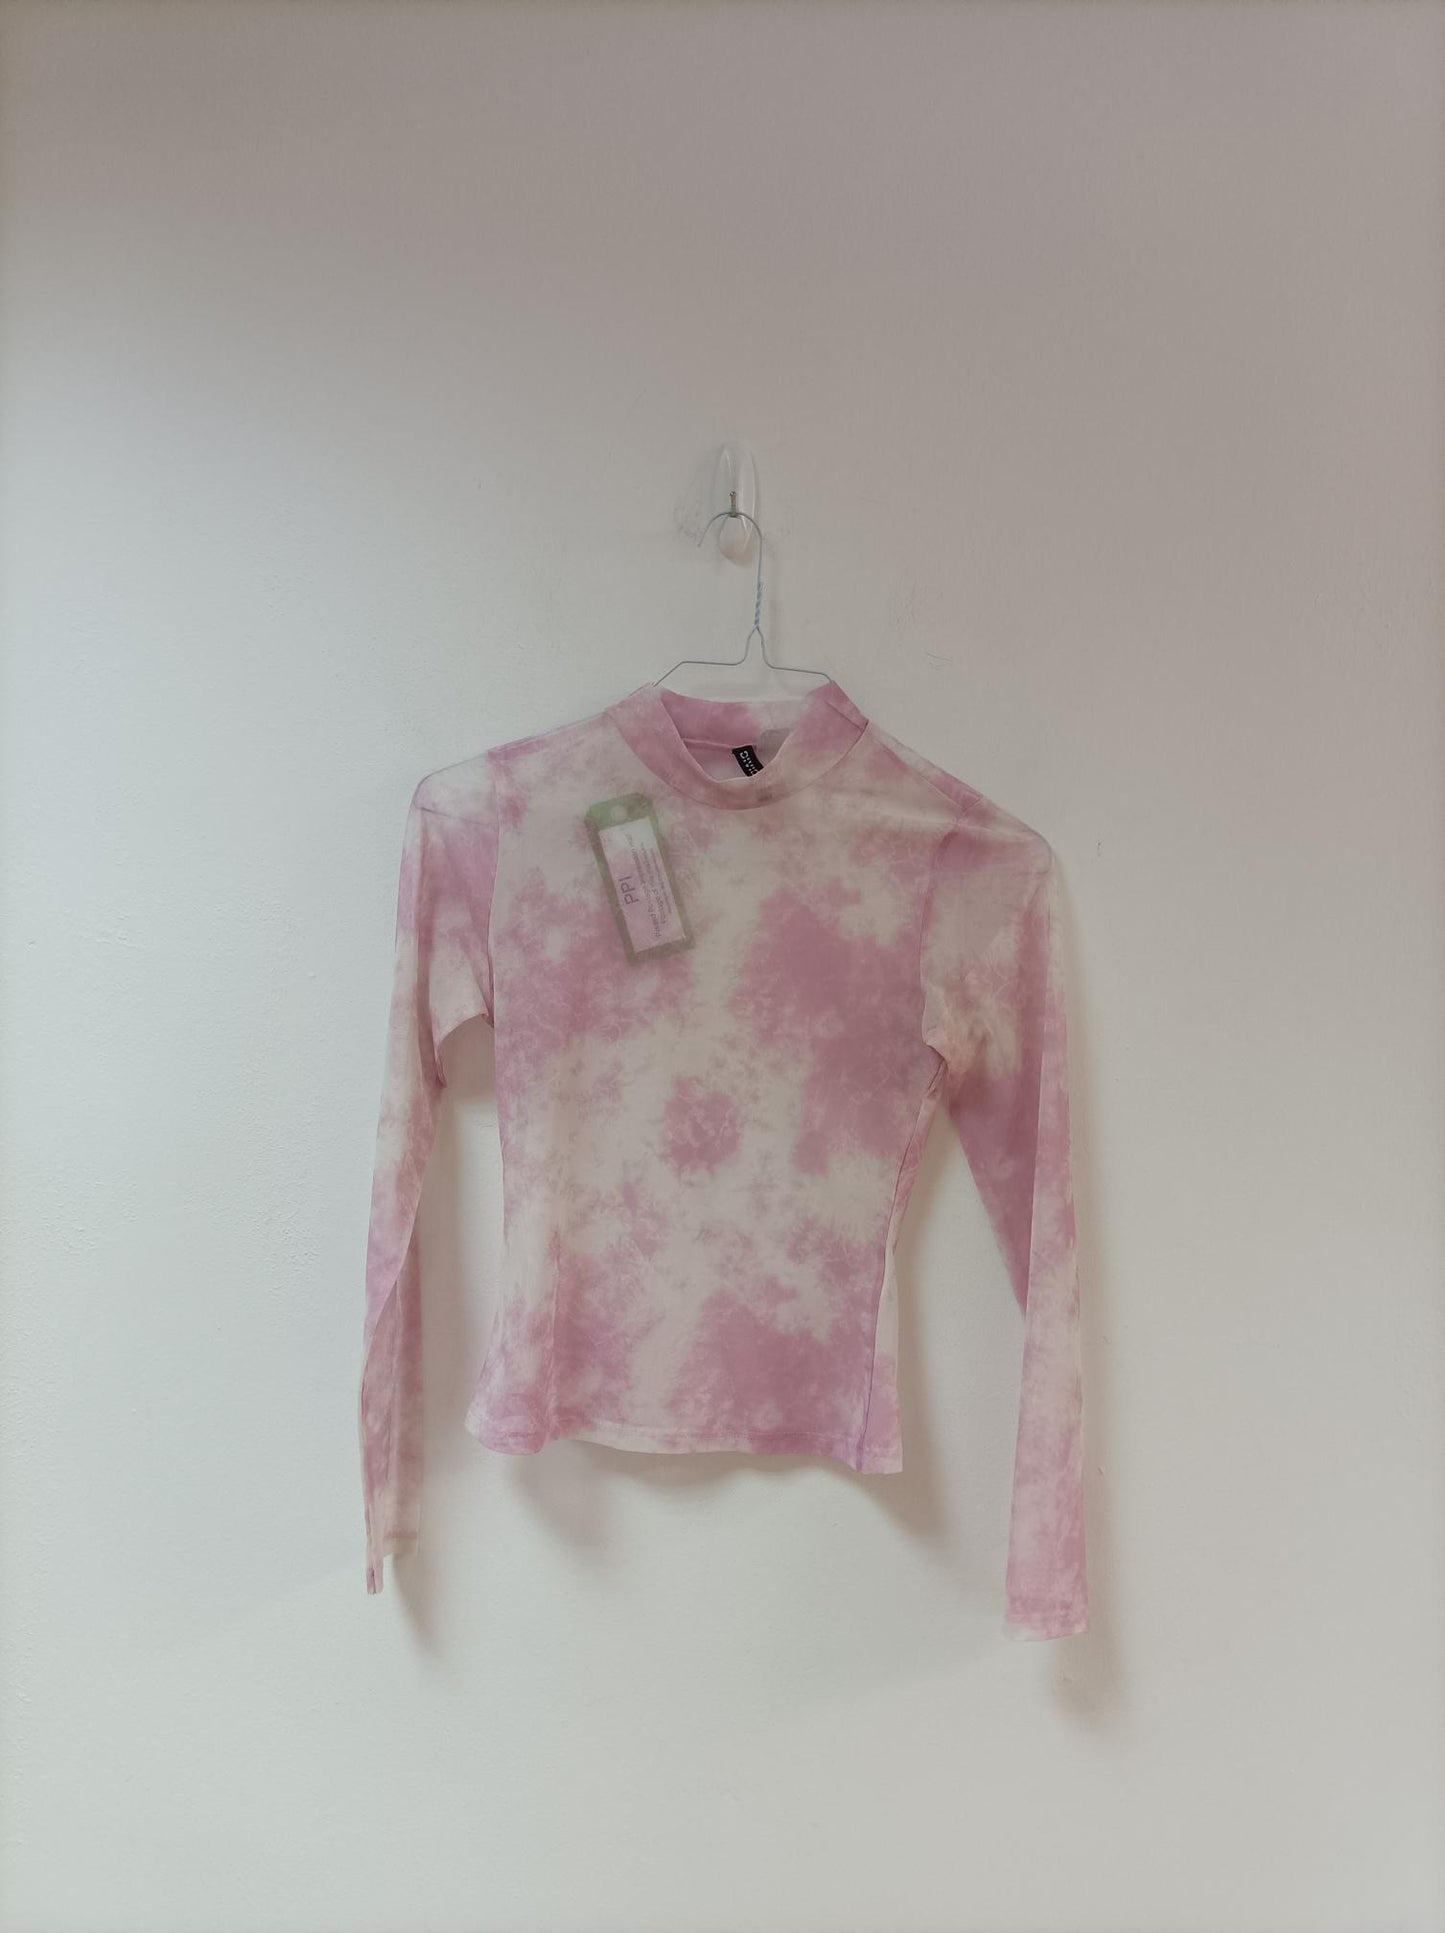 Pink & White High Neck Mesh Blouse, H&M, Size 10, 8